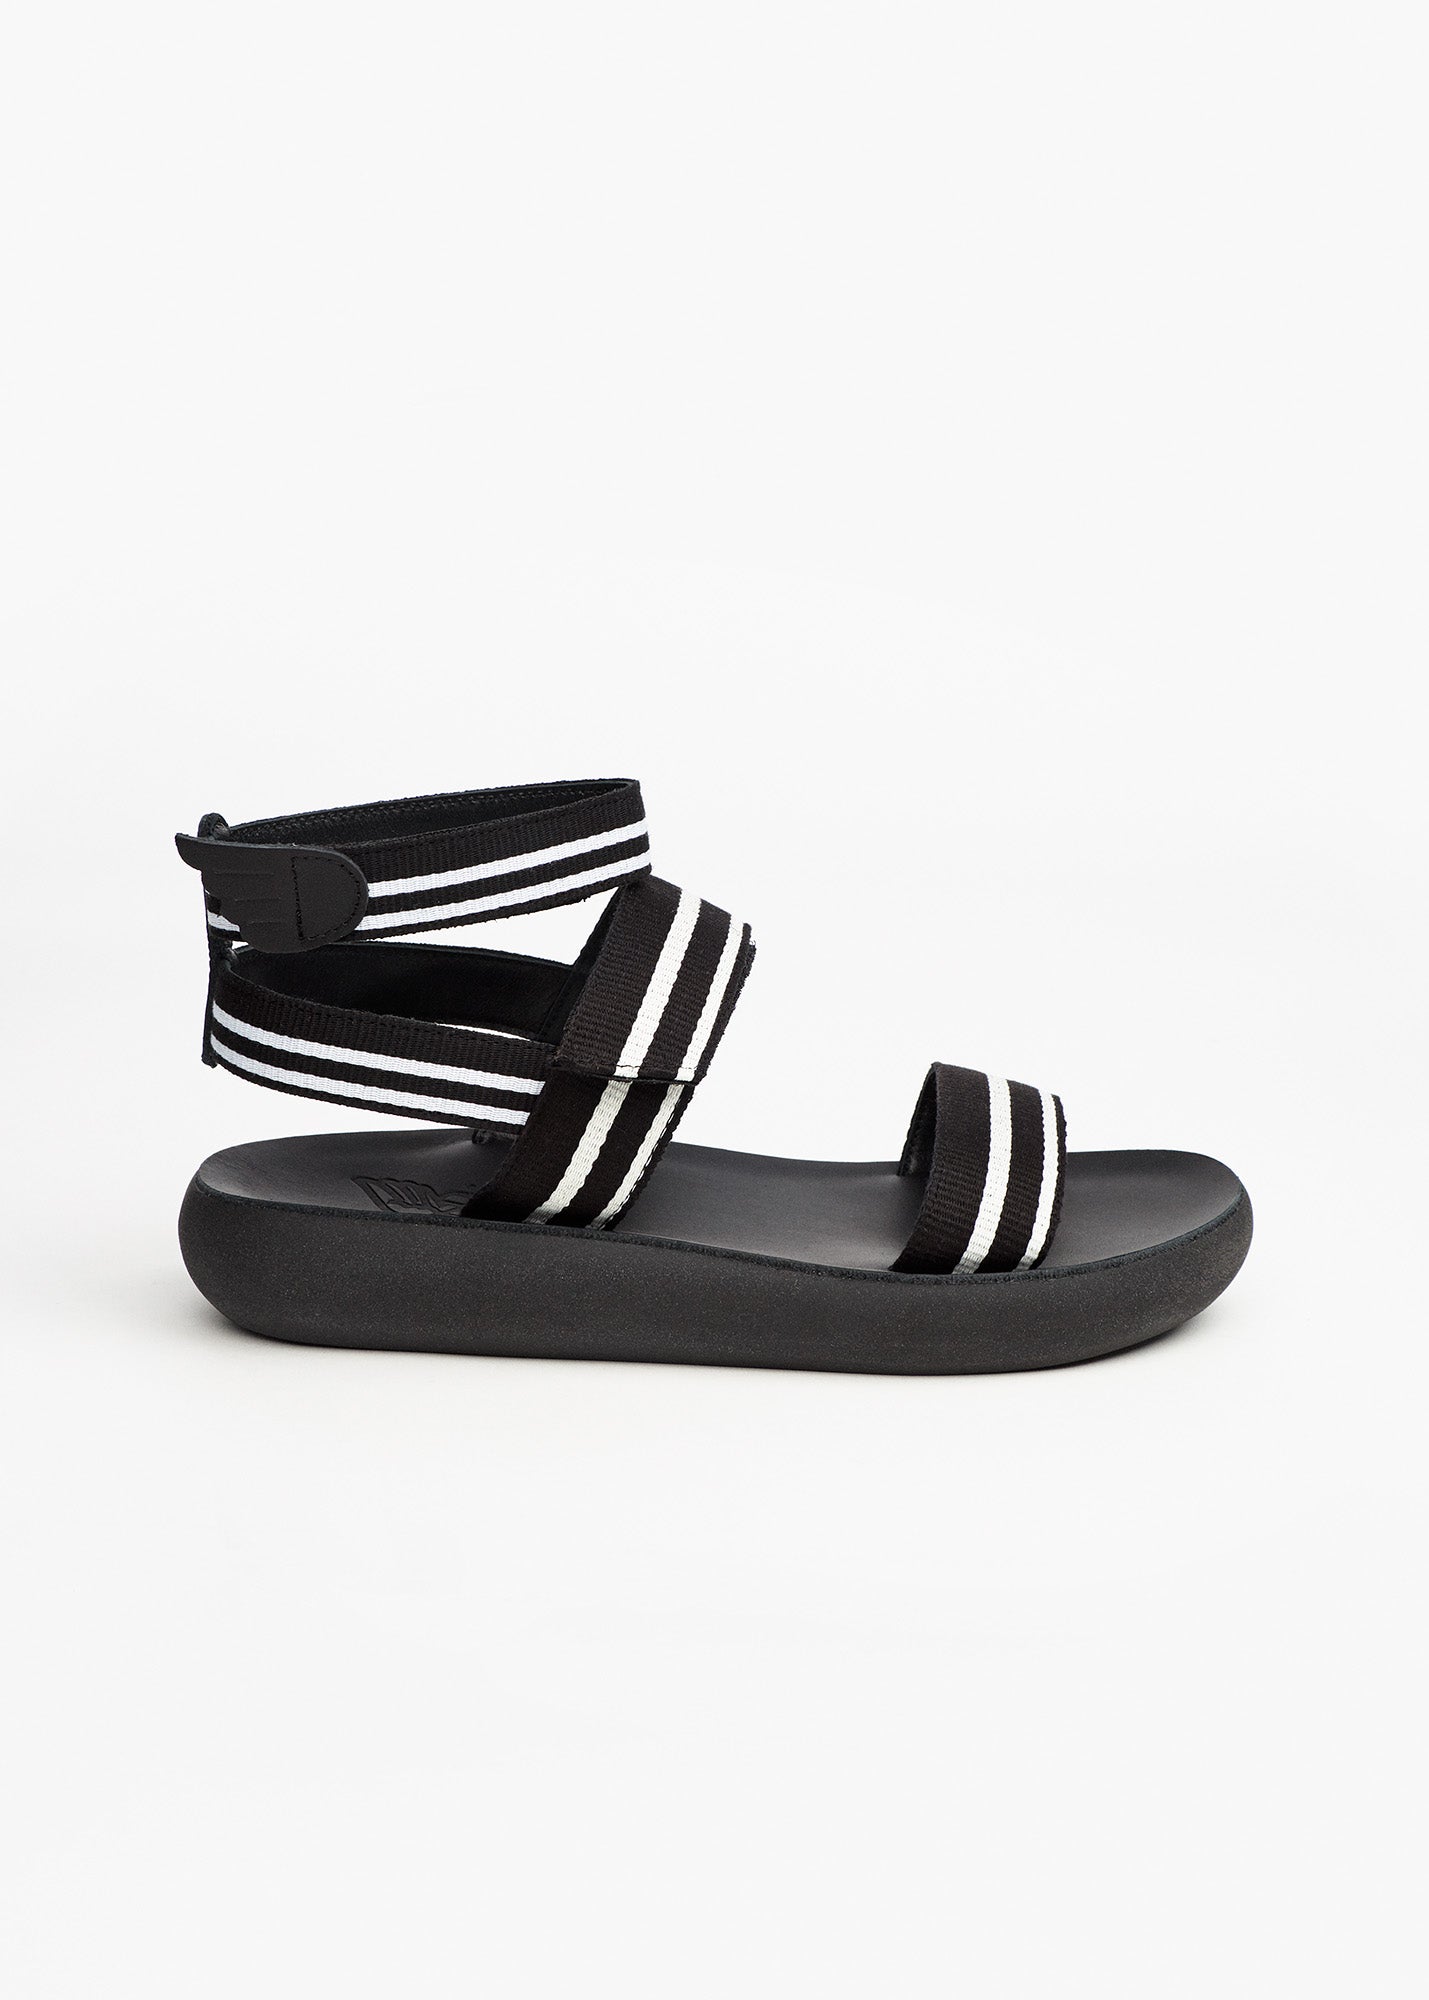 Greek Sandals Nostalgia Black/ Beige Stripes | Tiina The Store